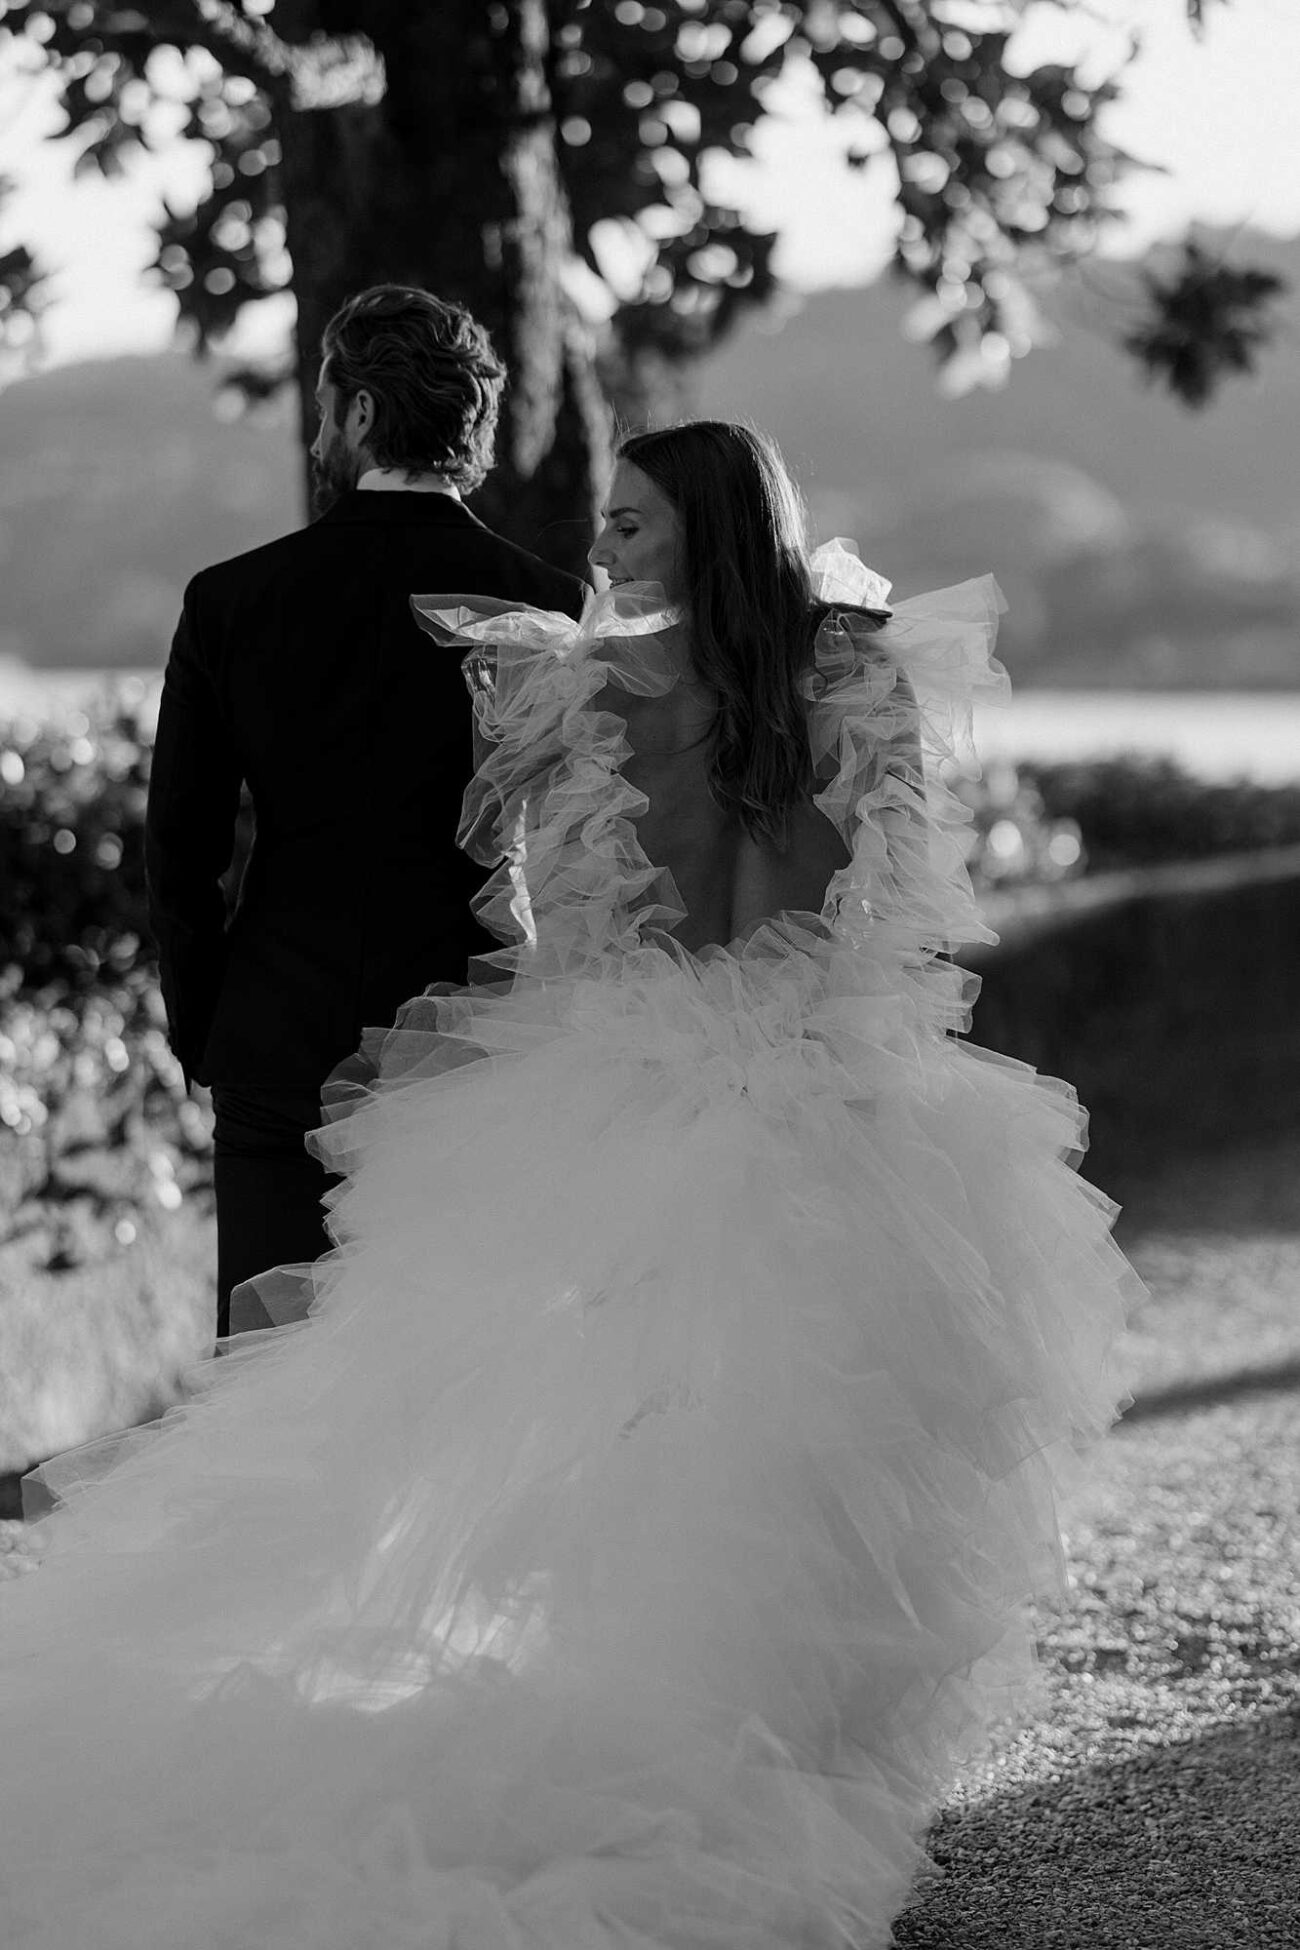 Villa Pizzo wedding in Lake Como in Italy.